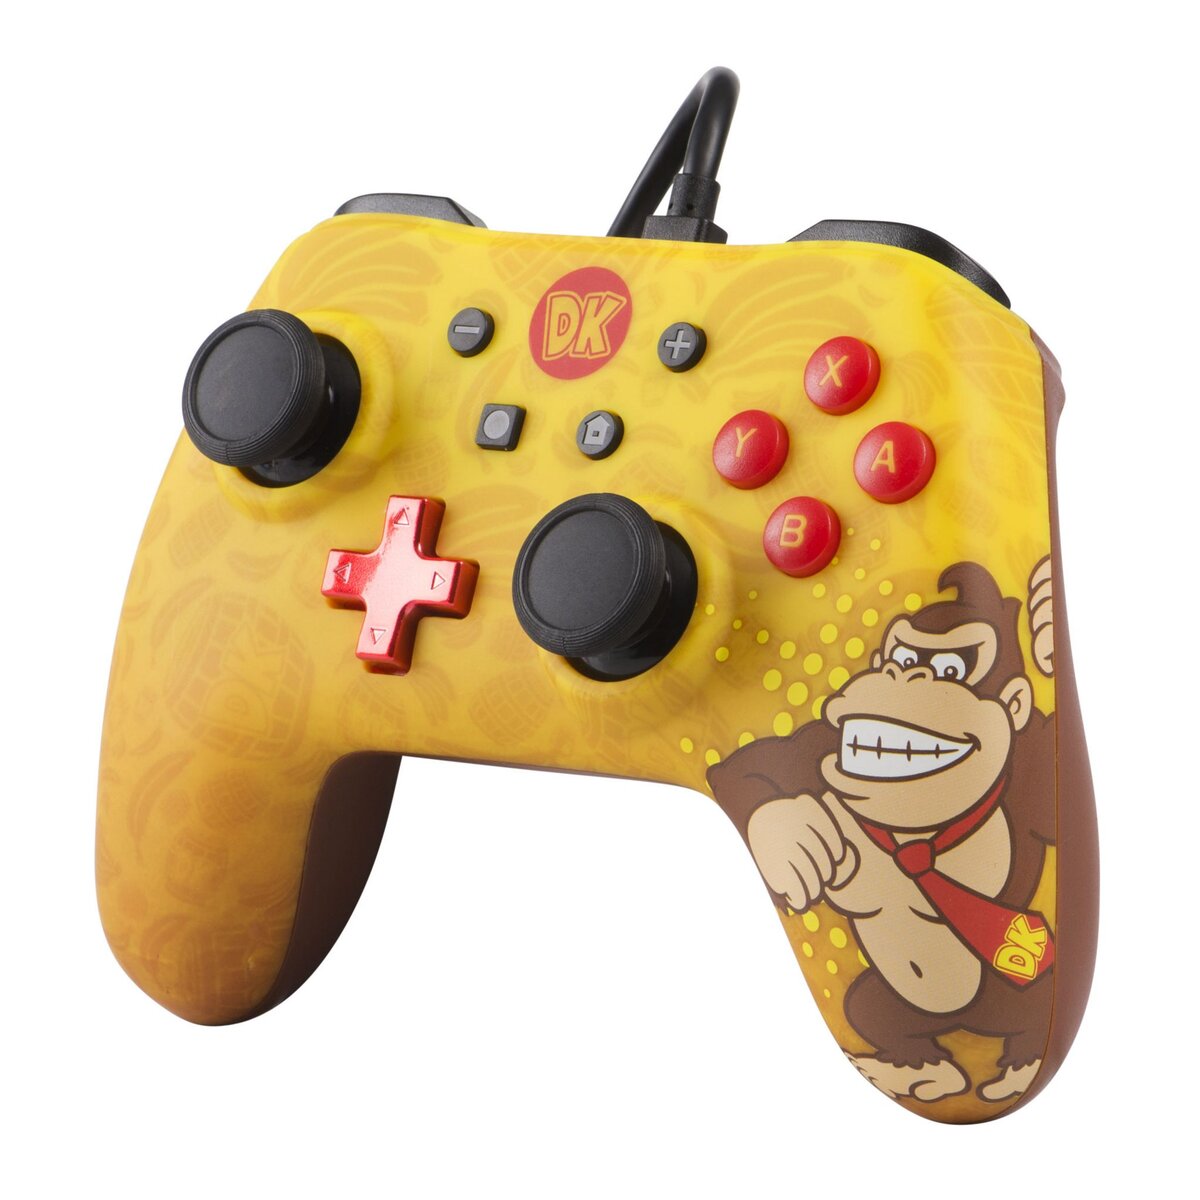 Manette filaire Donkey Kong Nintendo Switch